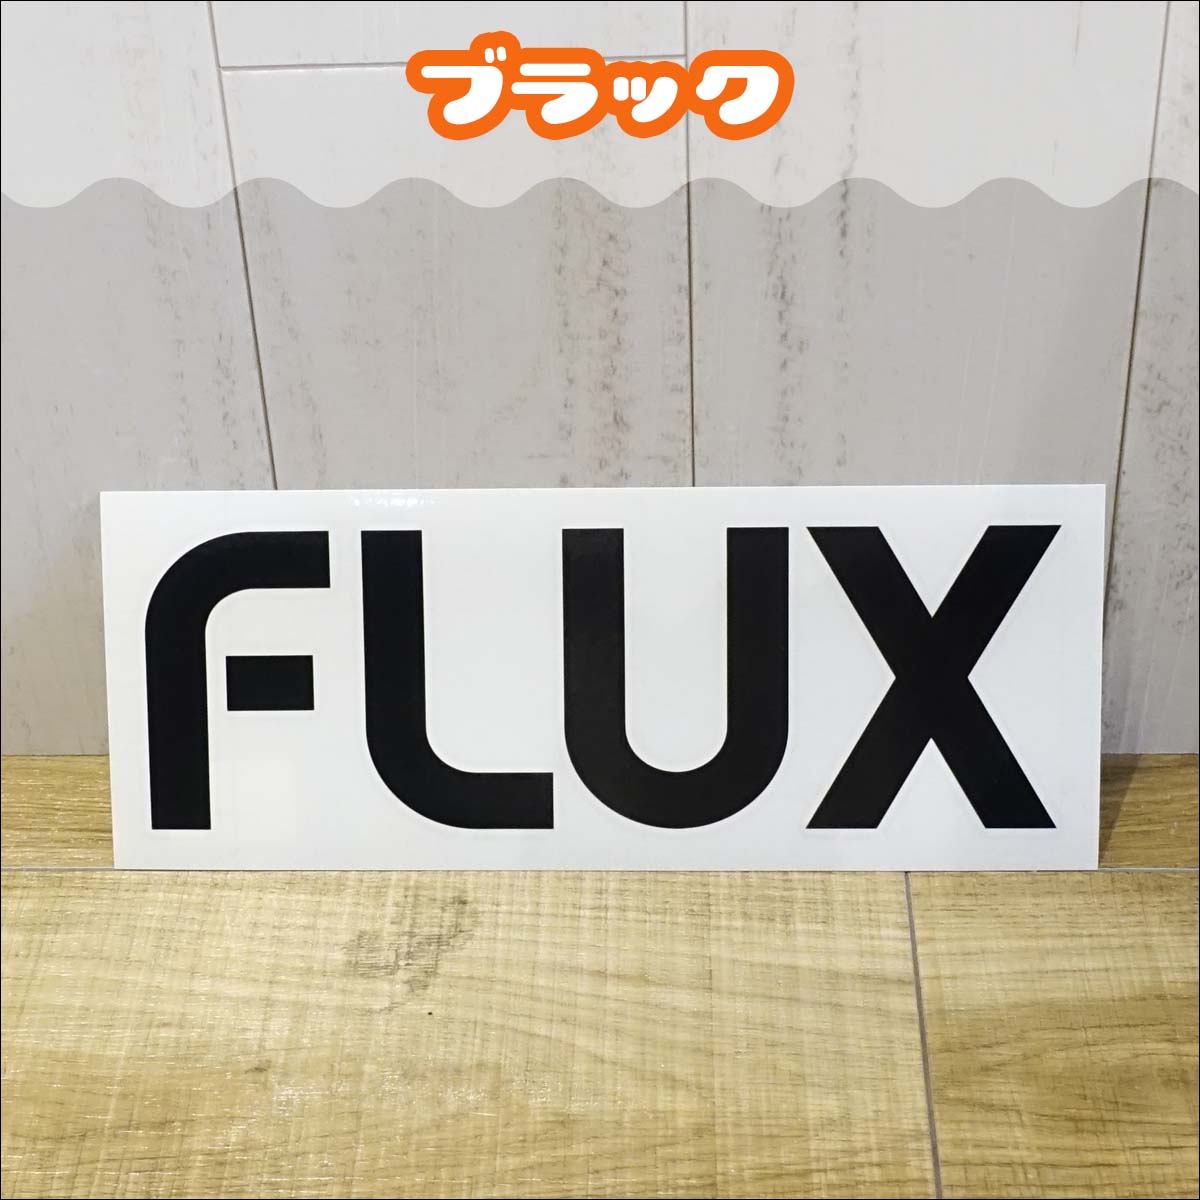 FLUX フラックス ステッカー 22cm ロゴ ダイカット ッティング シール デカール 転写 スノーボード スノボー アクセサリー 白 黒 ホワイト ブラック 日本正規品